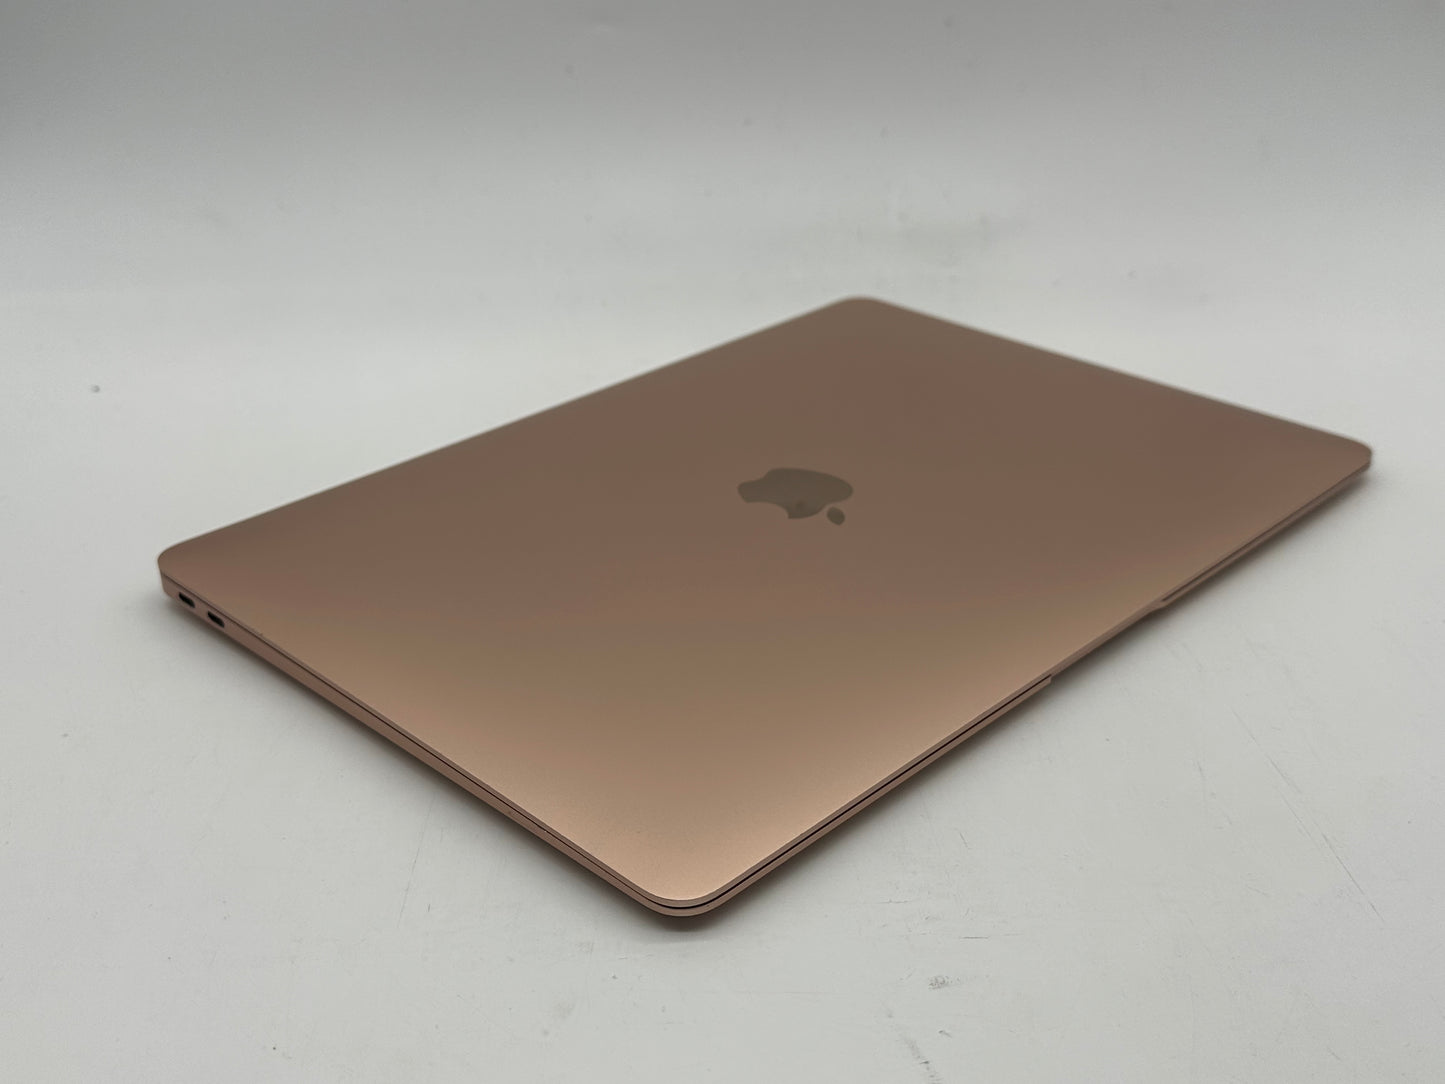 Apple 2019 MacBook Air 1.6GHz Dual-Core i5 8GB RAM 256GB SSD IUG617 "Gold"